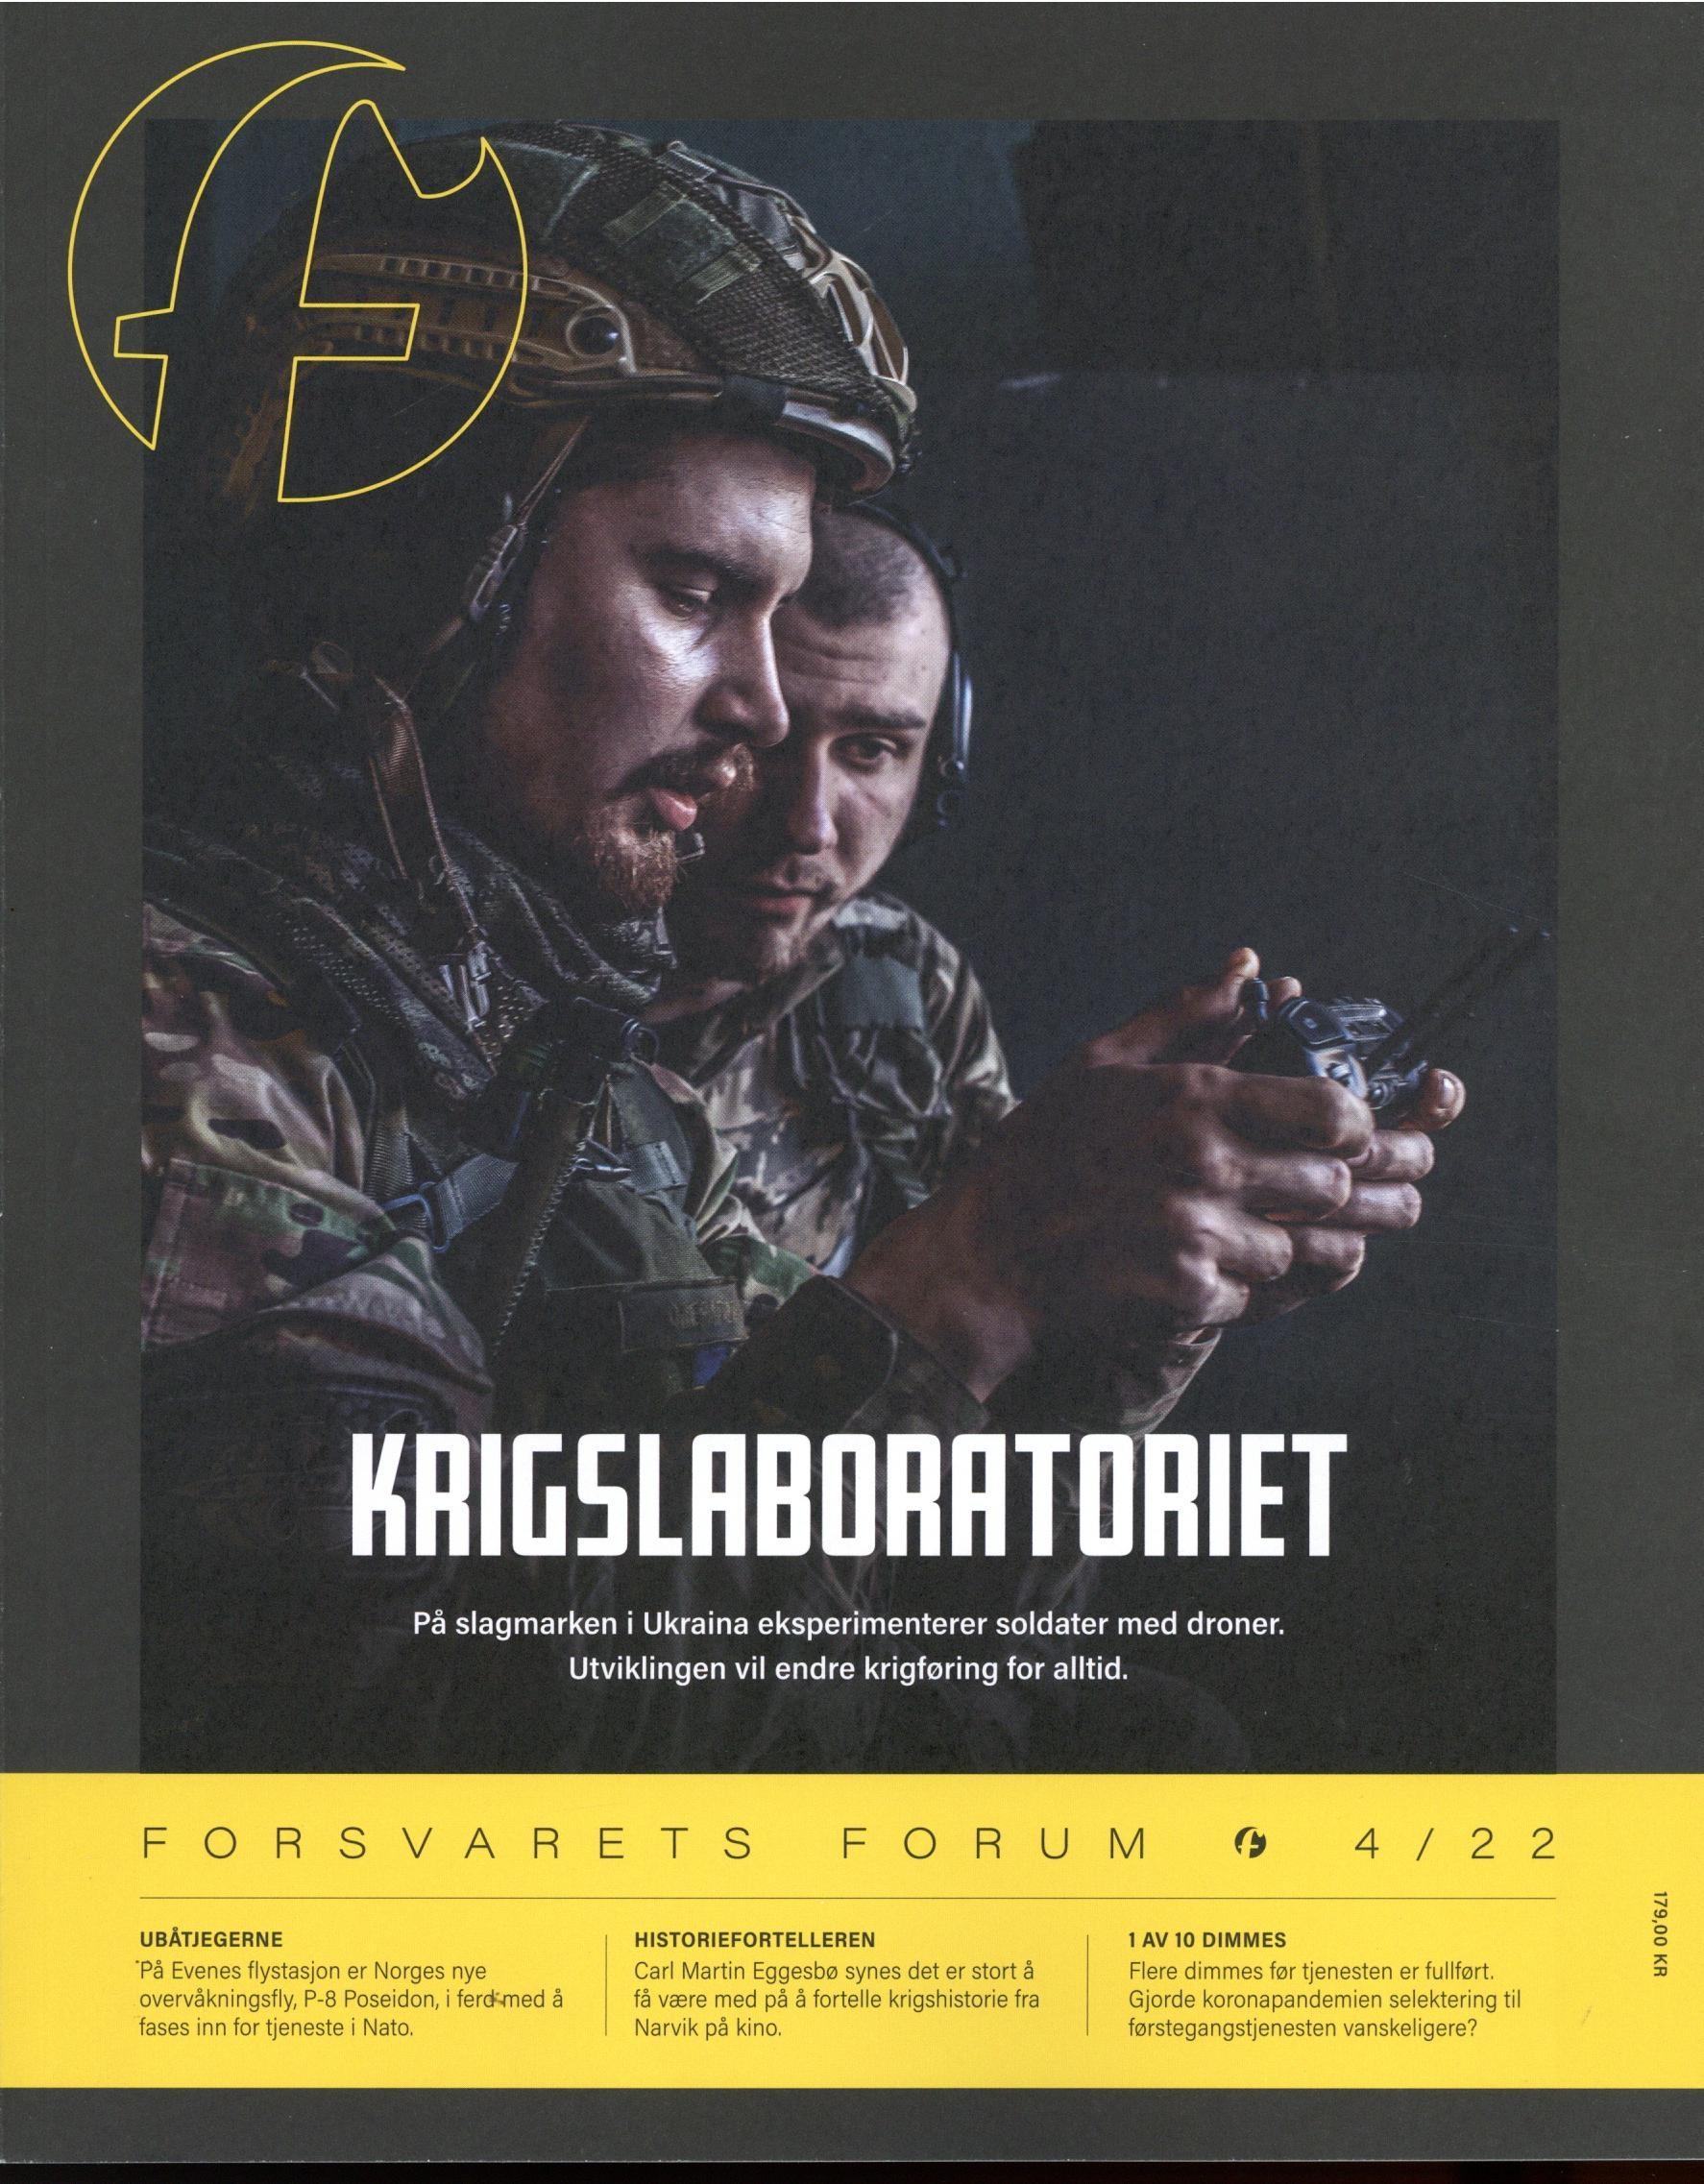 Forsvarets Forum